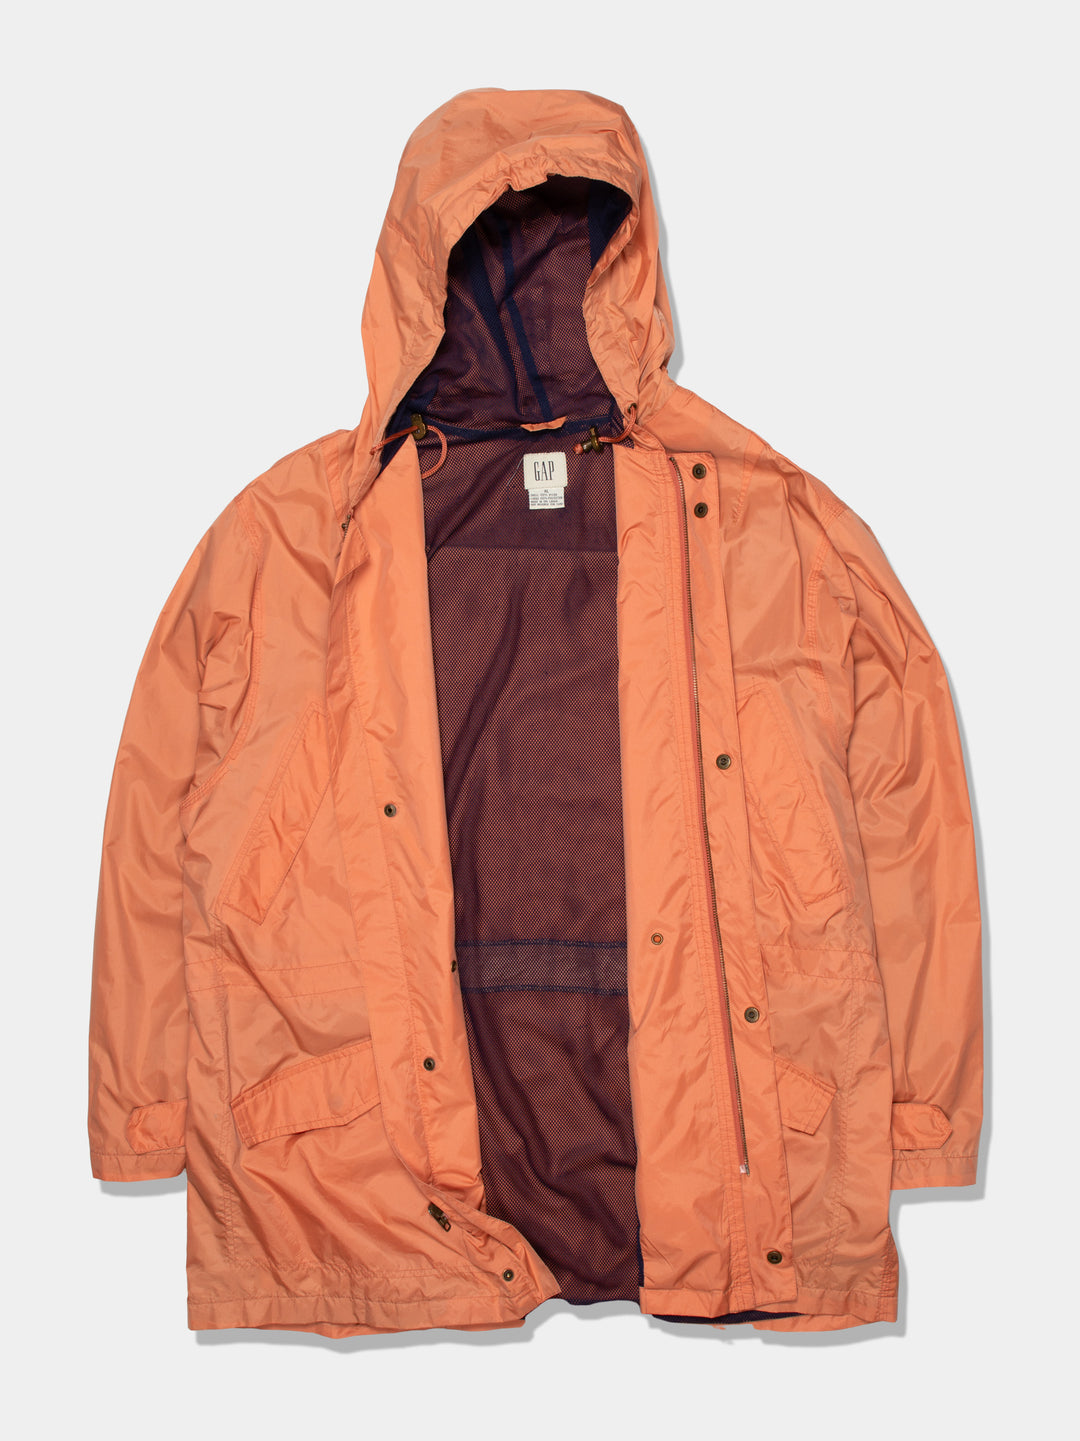 Vintage GAP Soft Orange Jacket (XL)